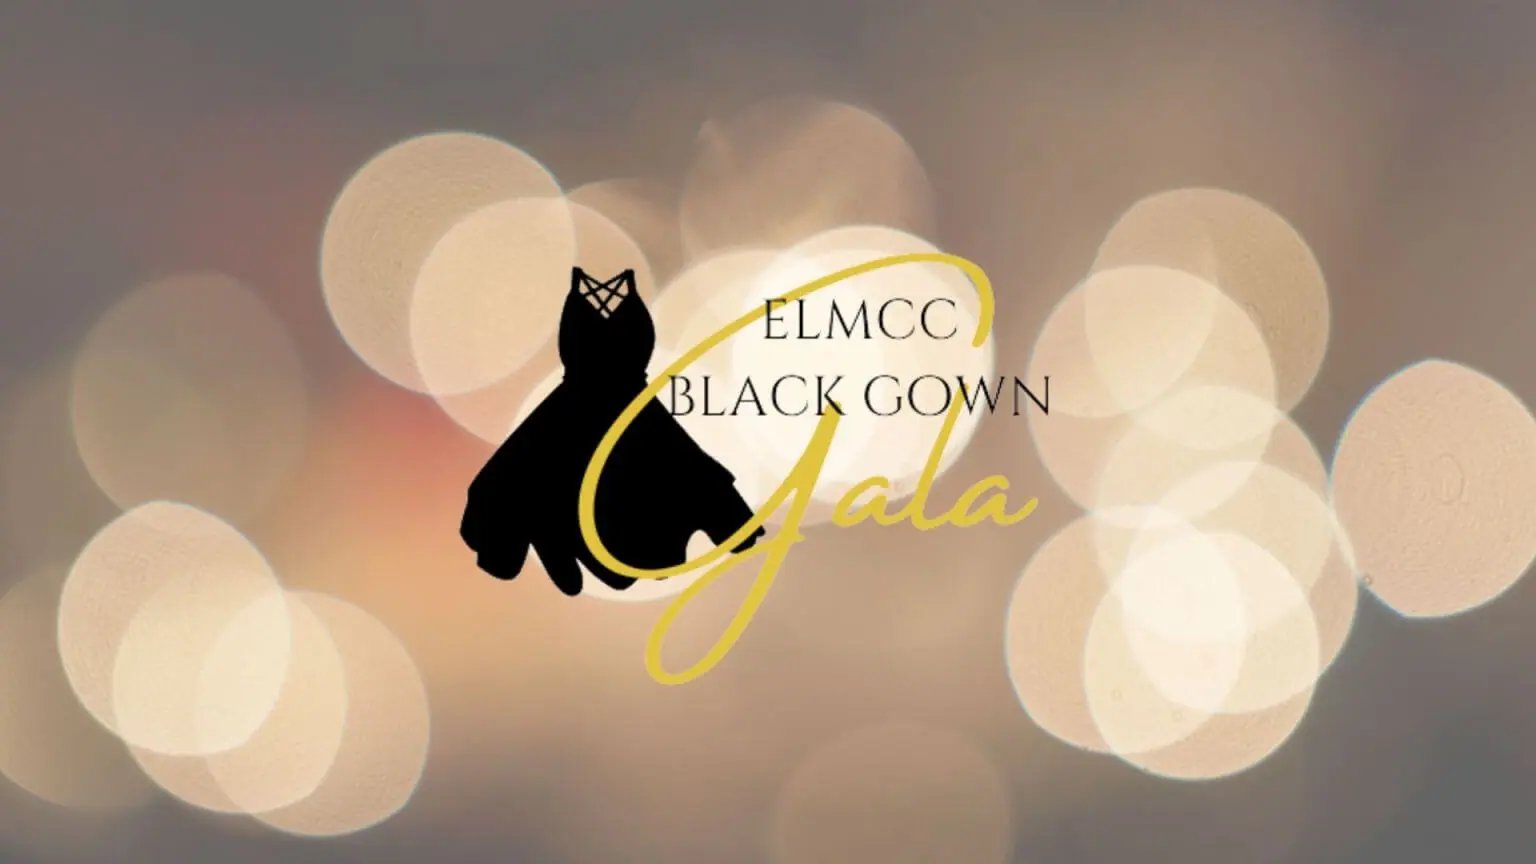 black gown gala